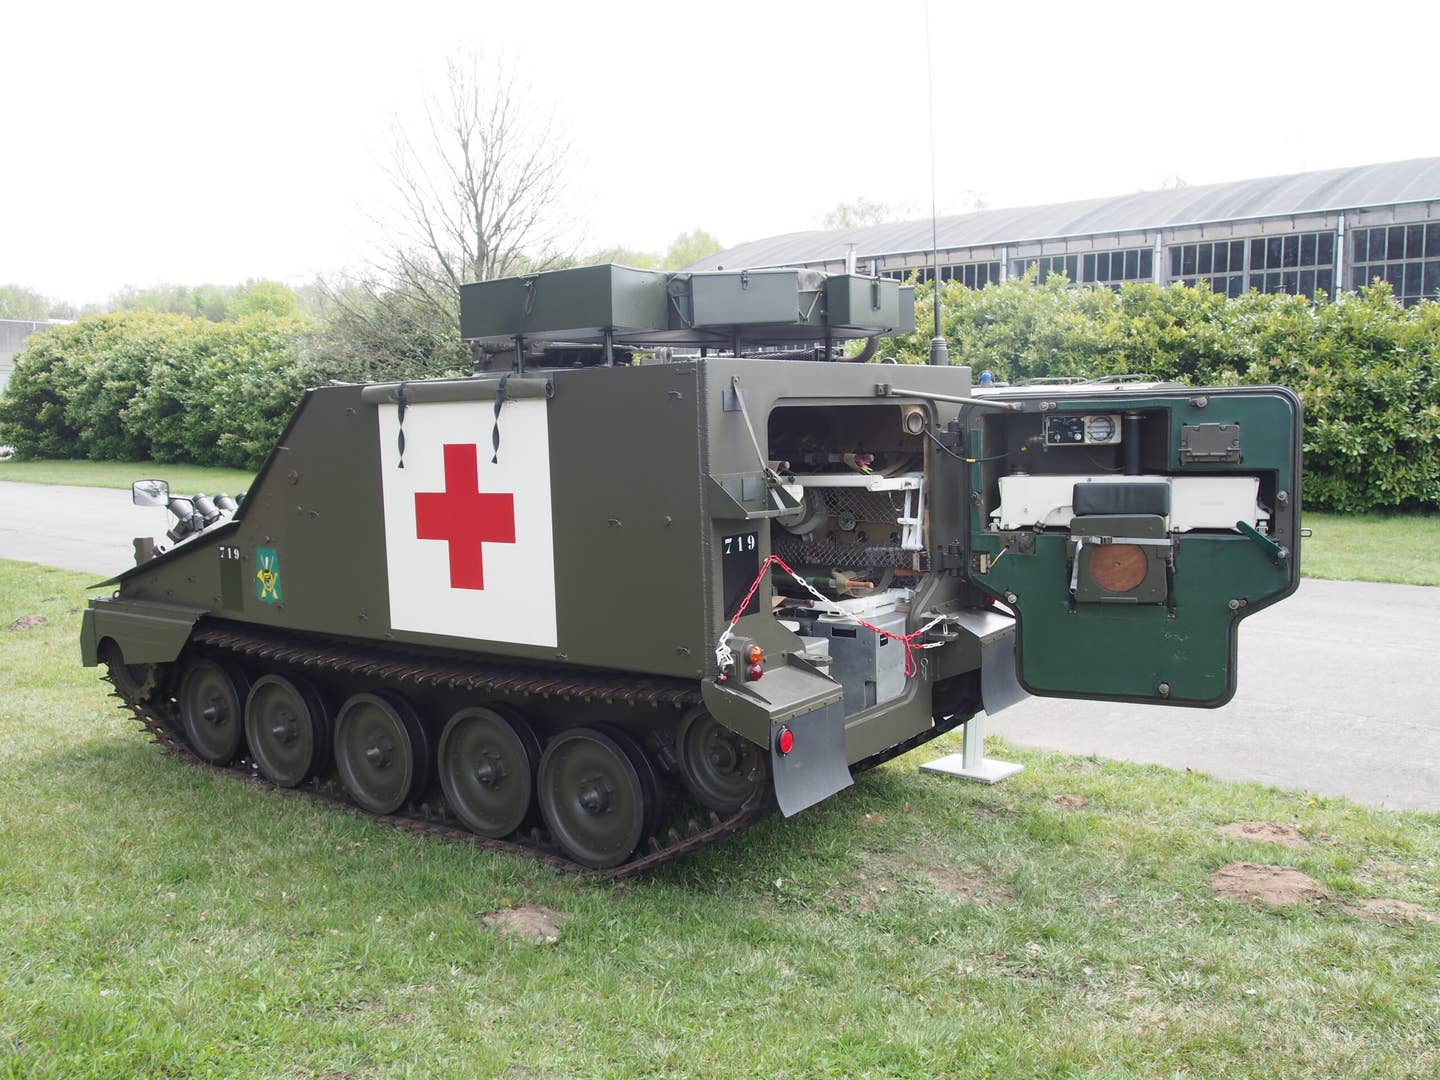 The FV104 Samaritan armored ambulance. <em>Credit: Alf van Beem/Wikimedia Commons</em>